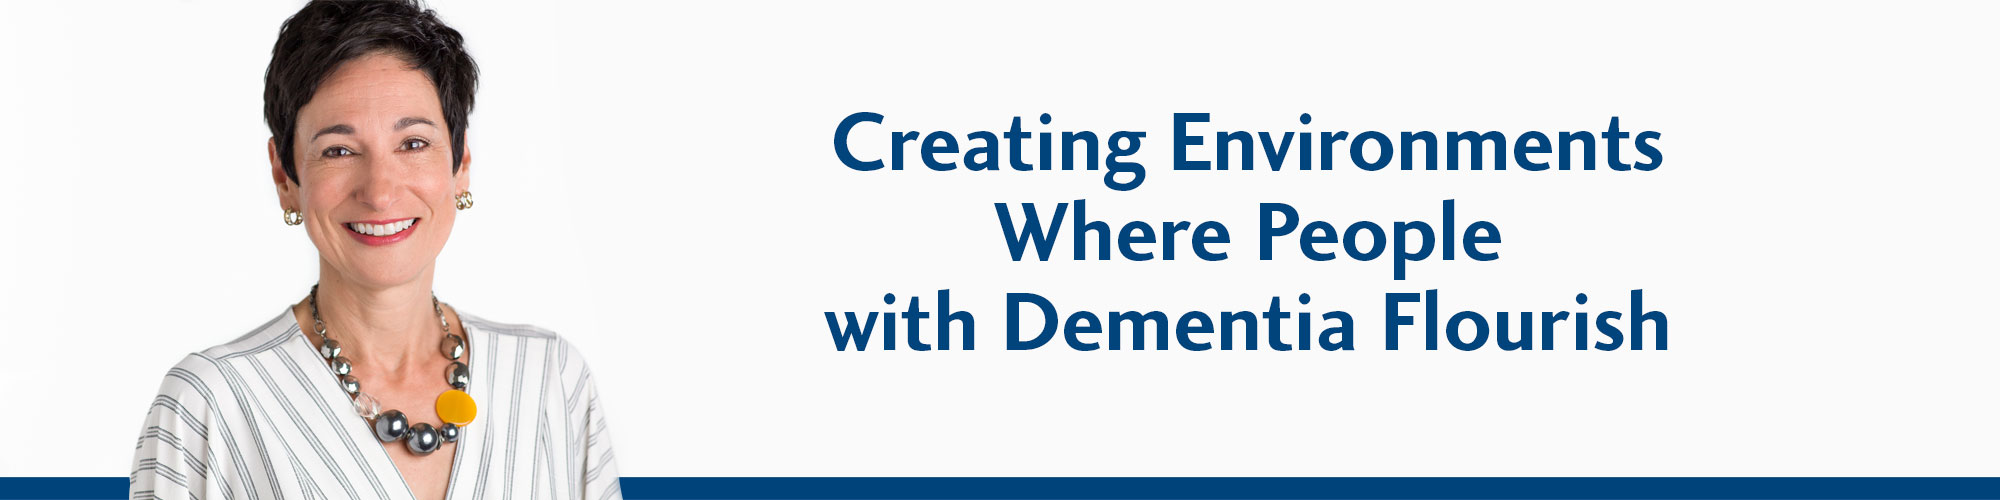 Jennifer Brush creates environments where people with dementia flourish